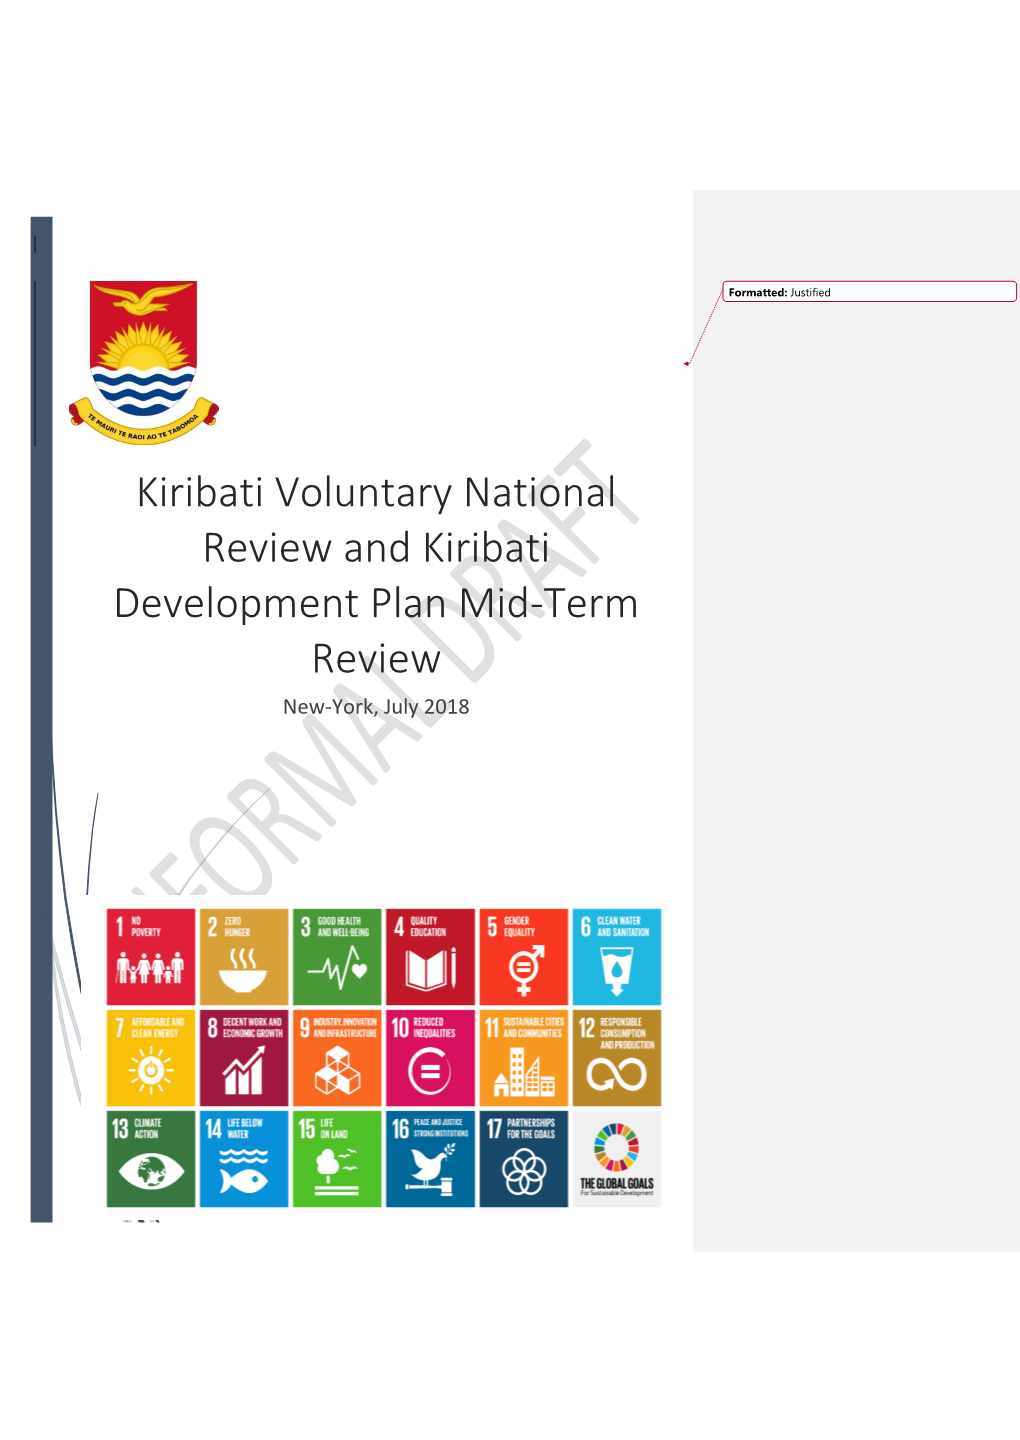 Kiribati National Voluntary Review and Kiribati Development Plan Mid